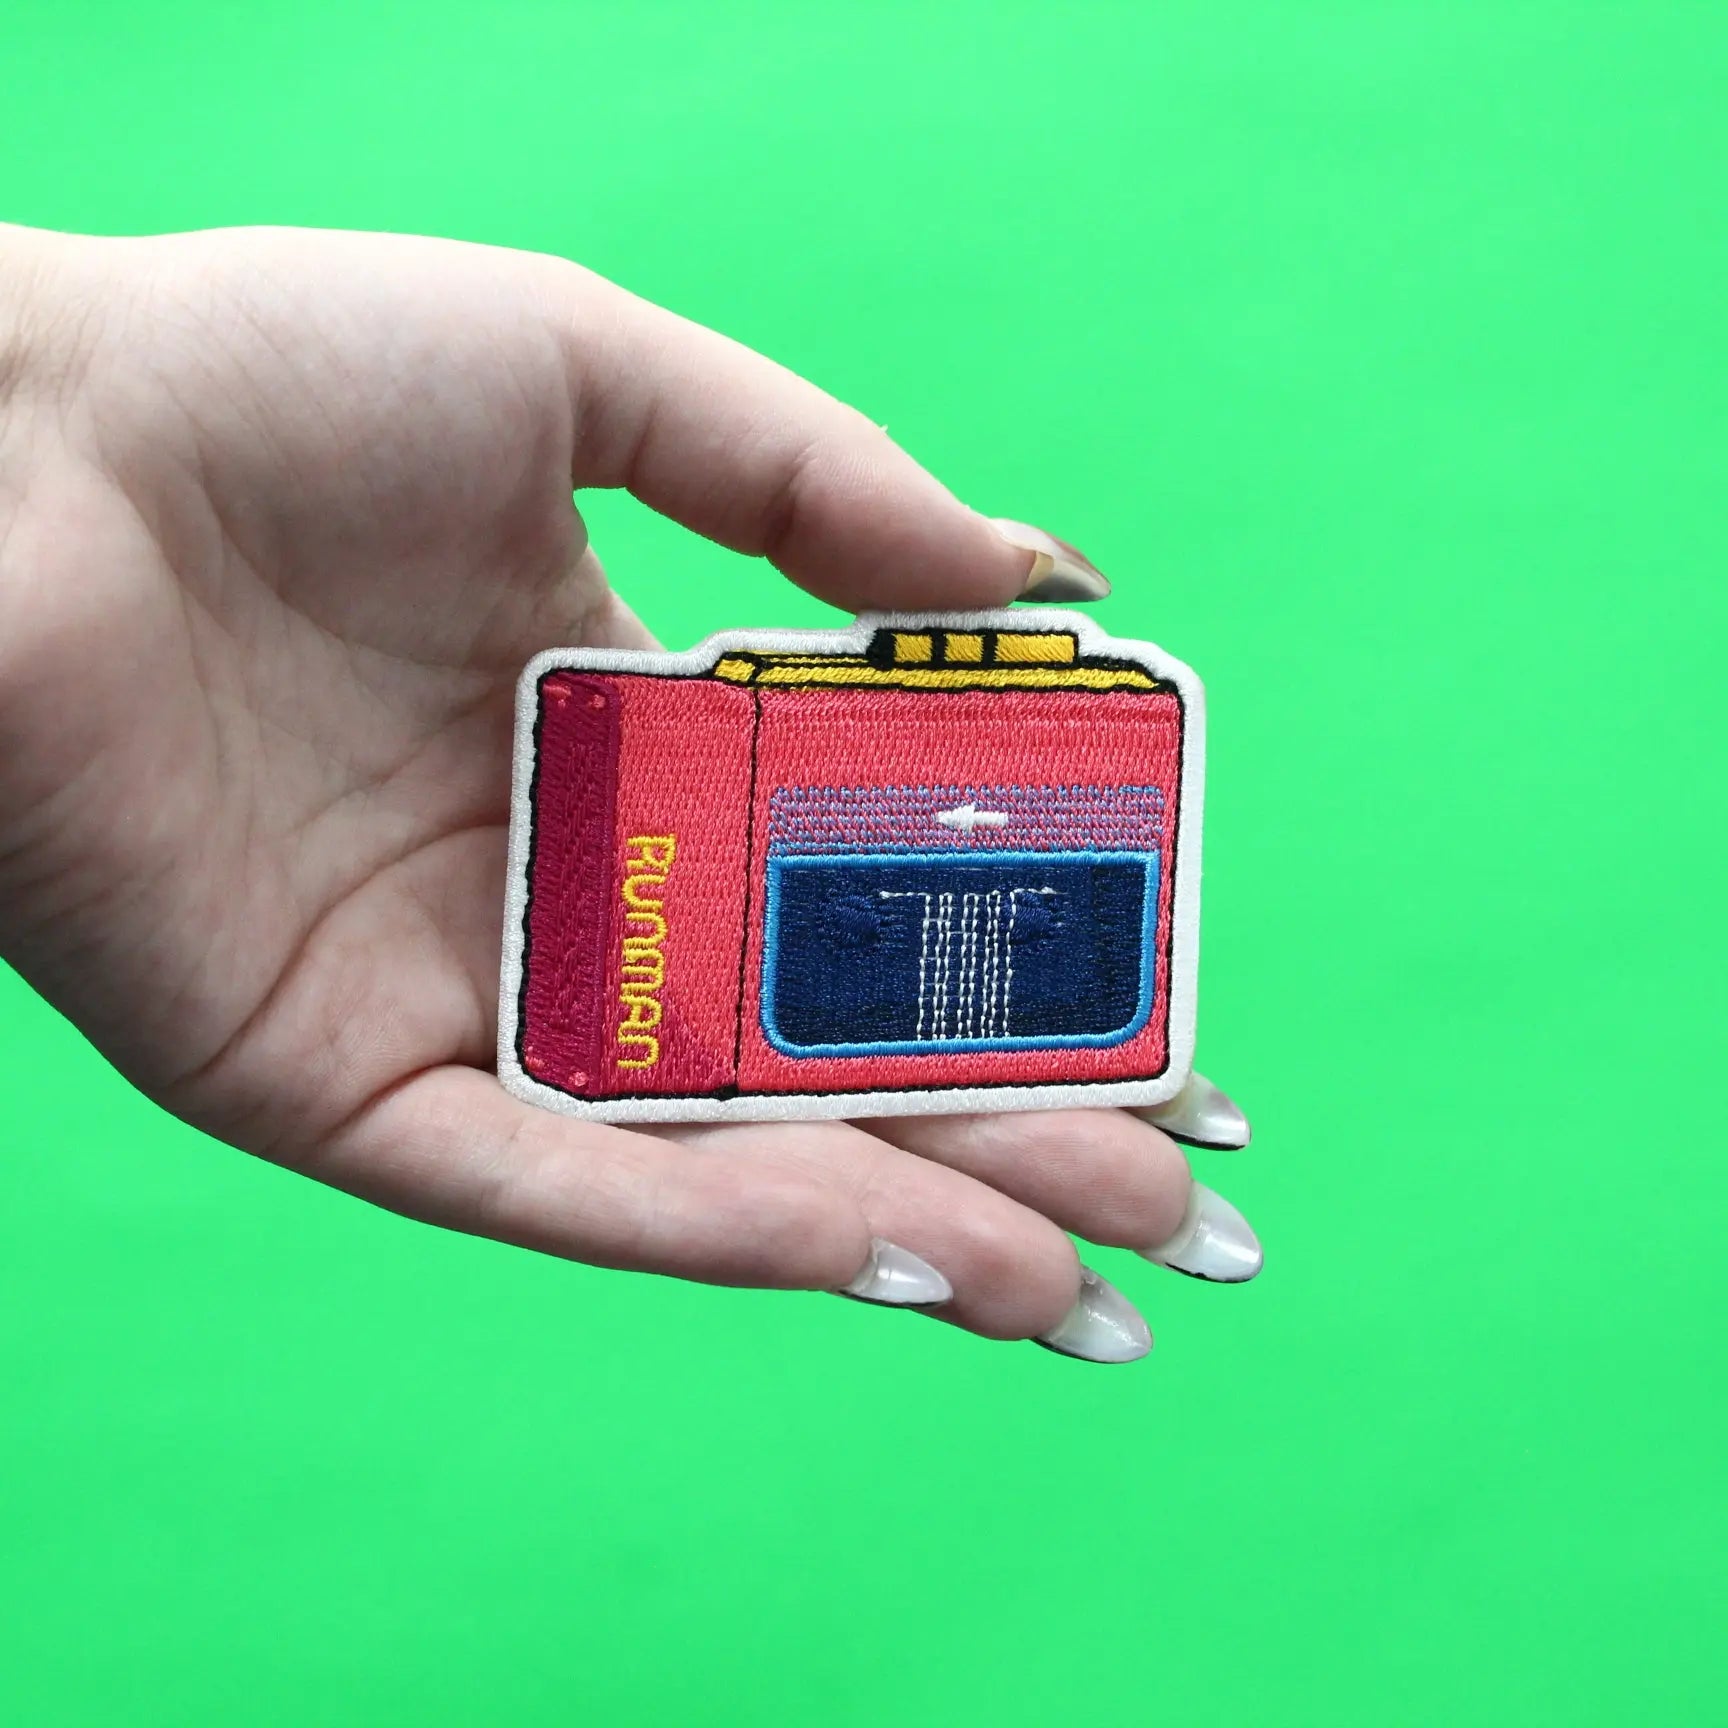 Retro Portable Cassette Player Patch Strange TV Radio Embroidered Iron On